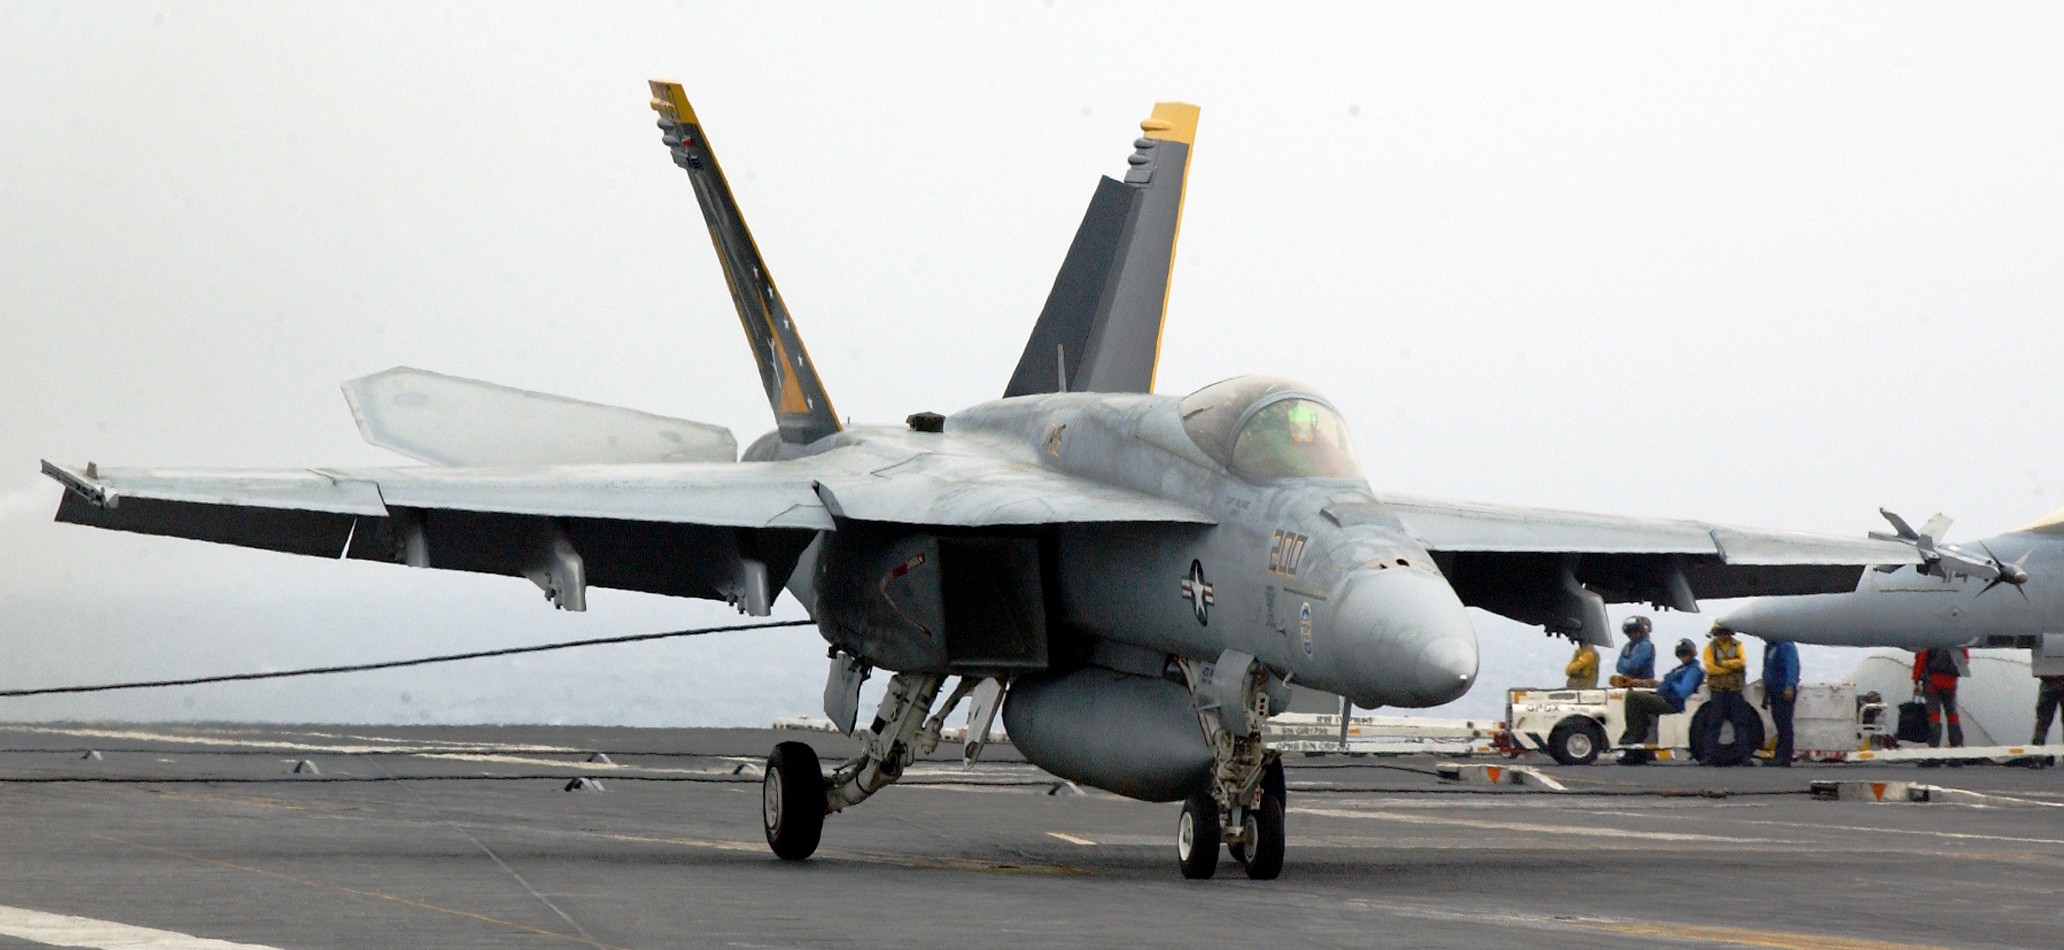 vfa-115 eagles strike fighter squadron f/a-18e super hornet cvw-14 uss ronald reagan cvn-76 2005 51